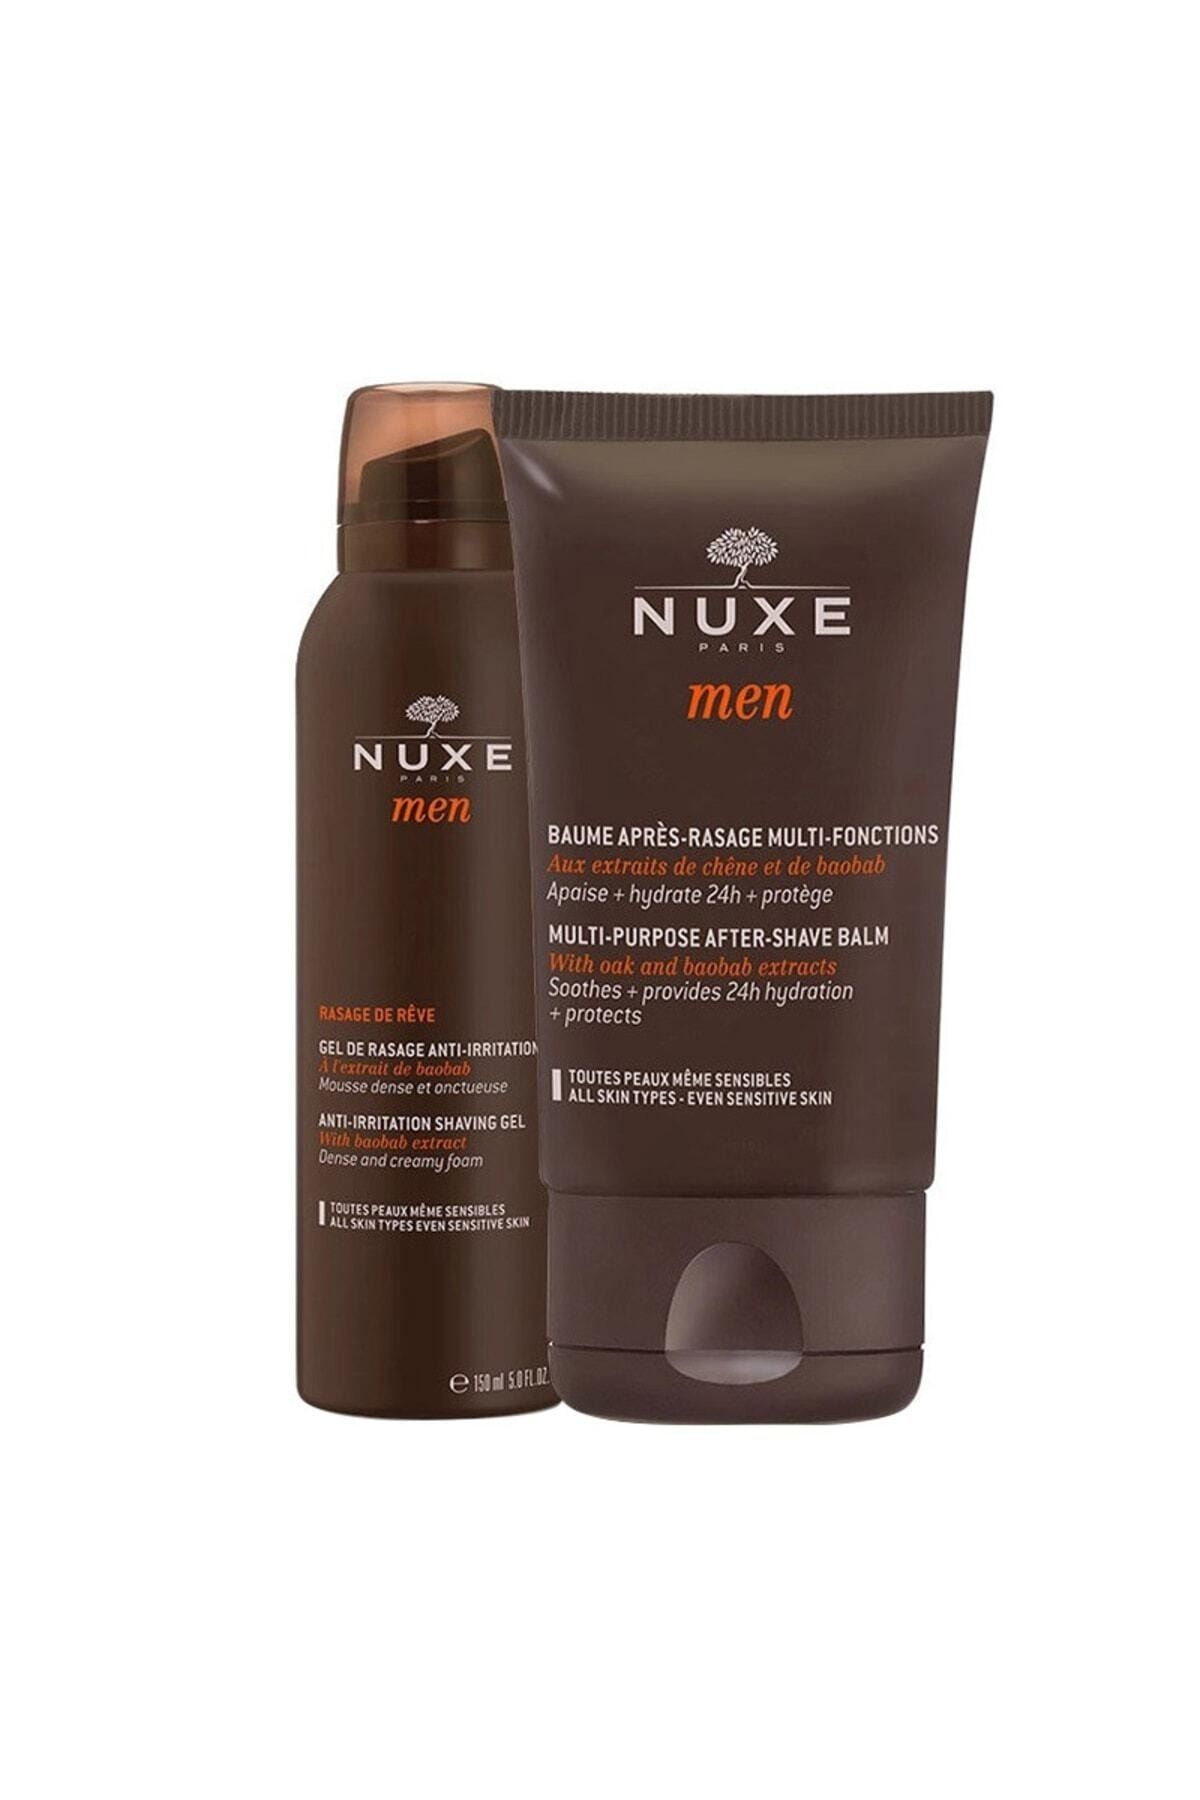 Nuxe ژل اصلاح مردانه با حجم ۱۵۰ میلی لیتر و بالم ۵۰ میلی لیتر برای تمام انواع پوست (شامل پوست حساس)